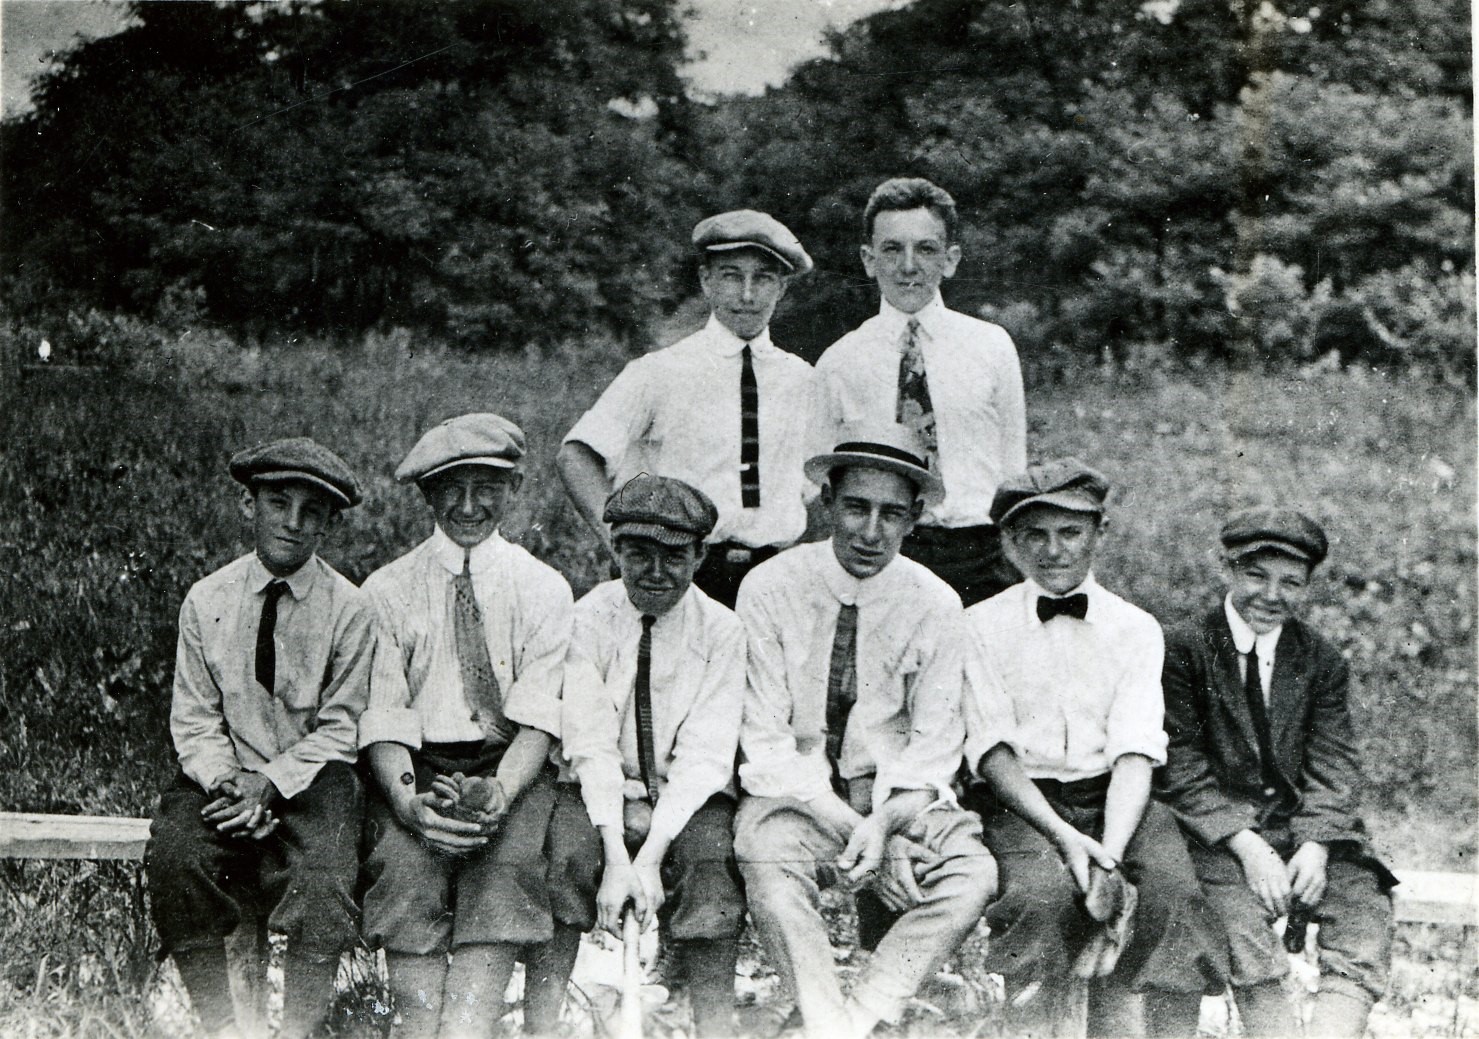 1914 ball team